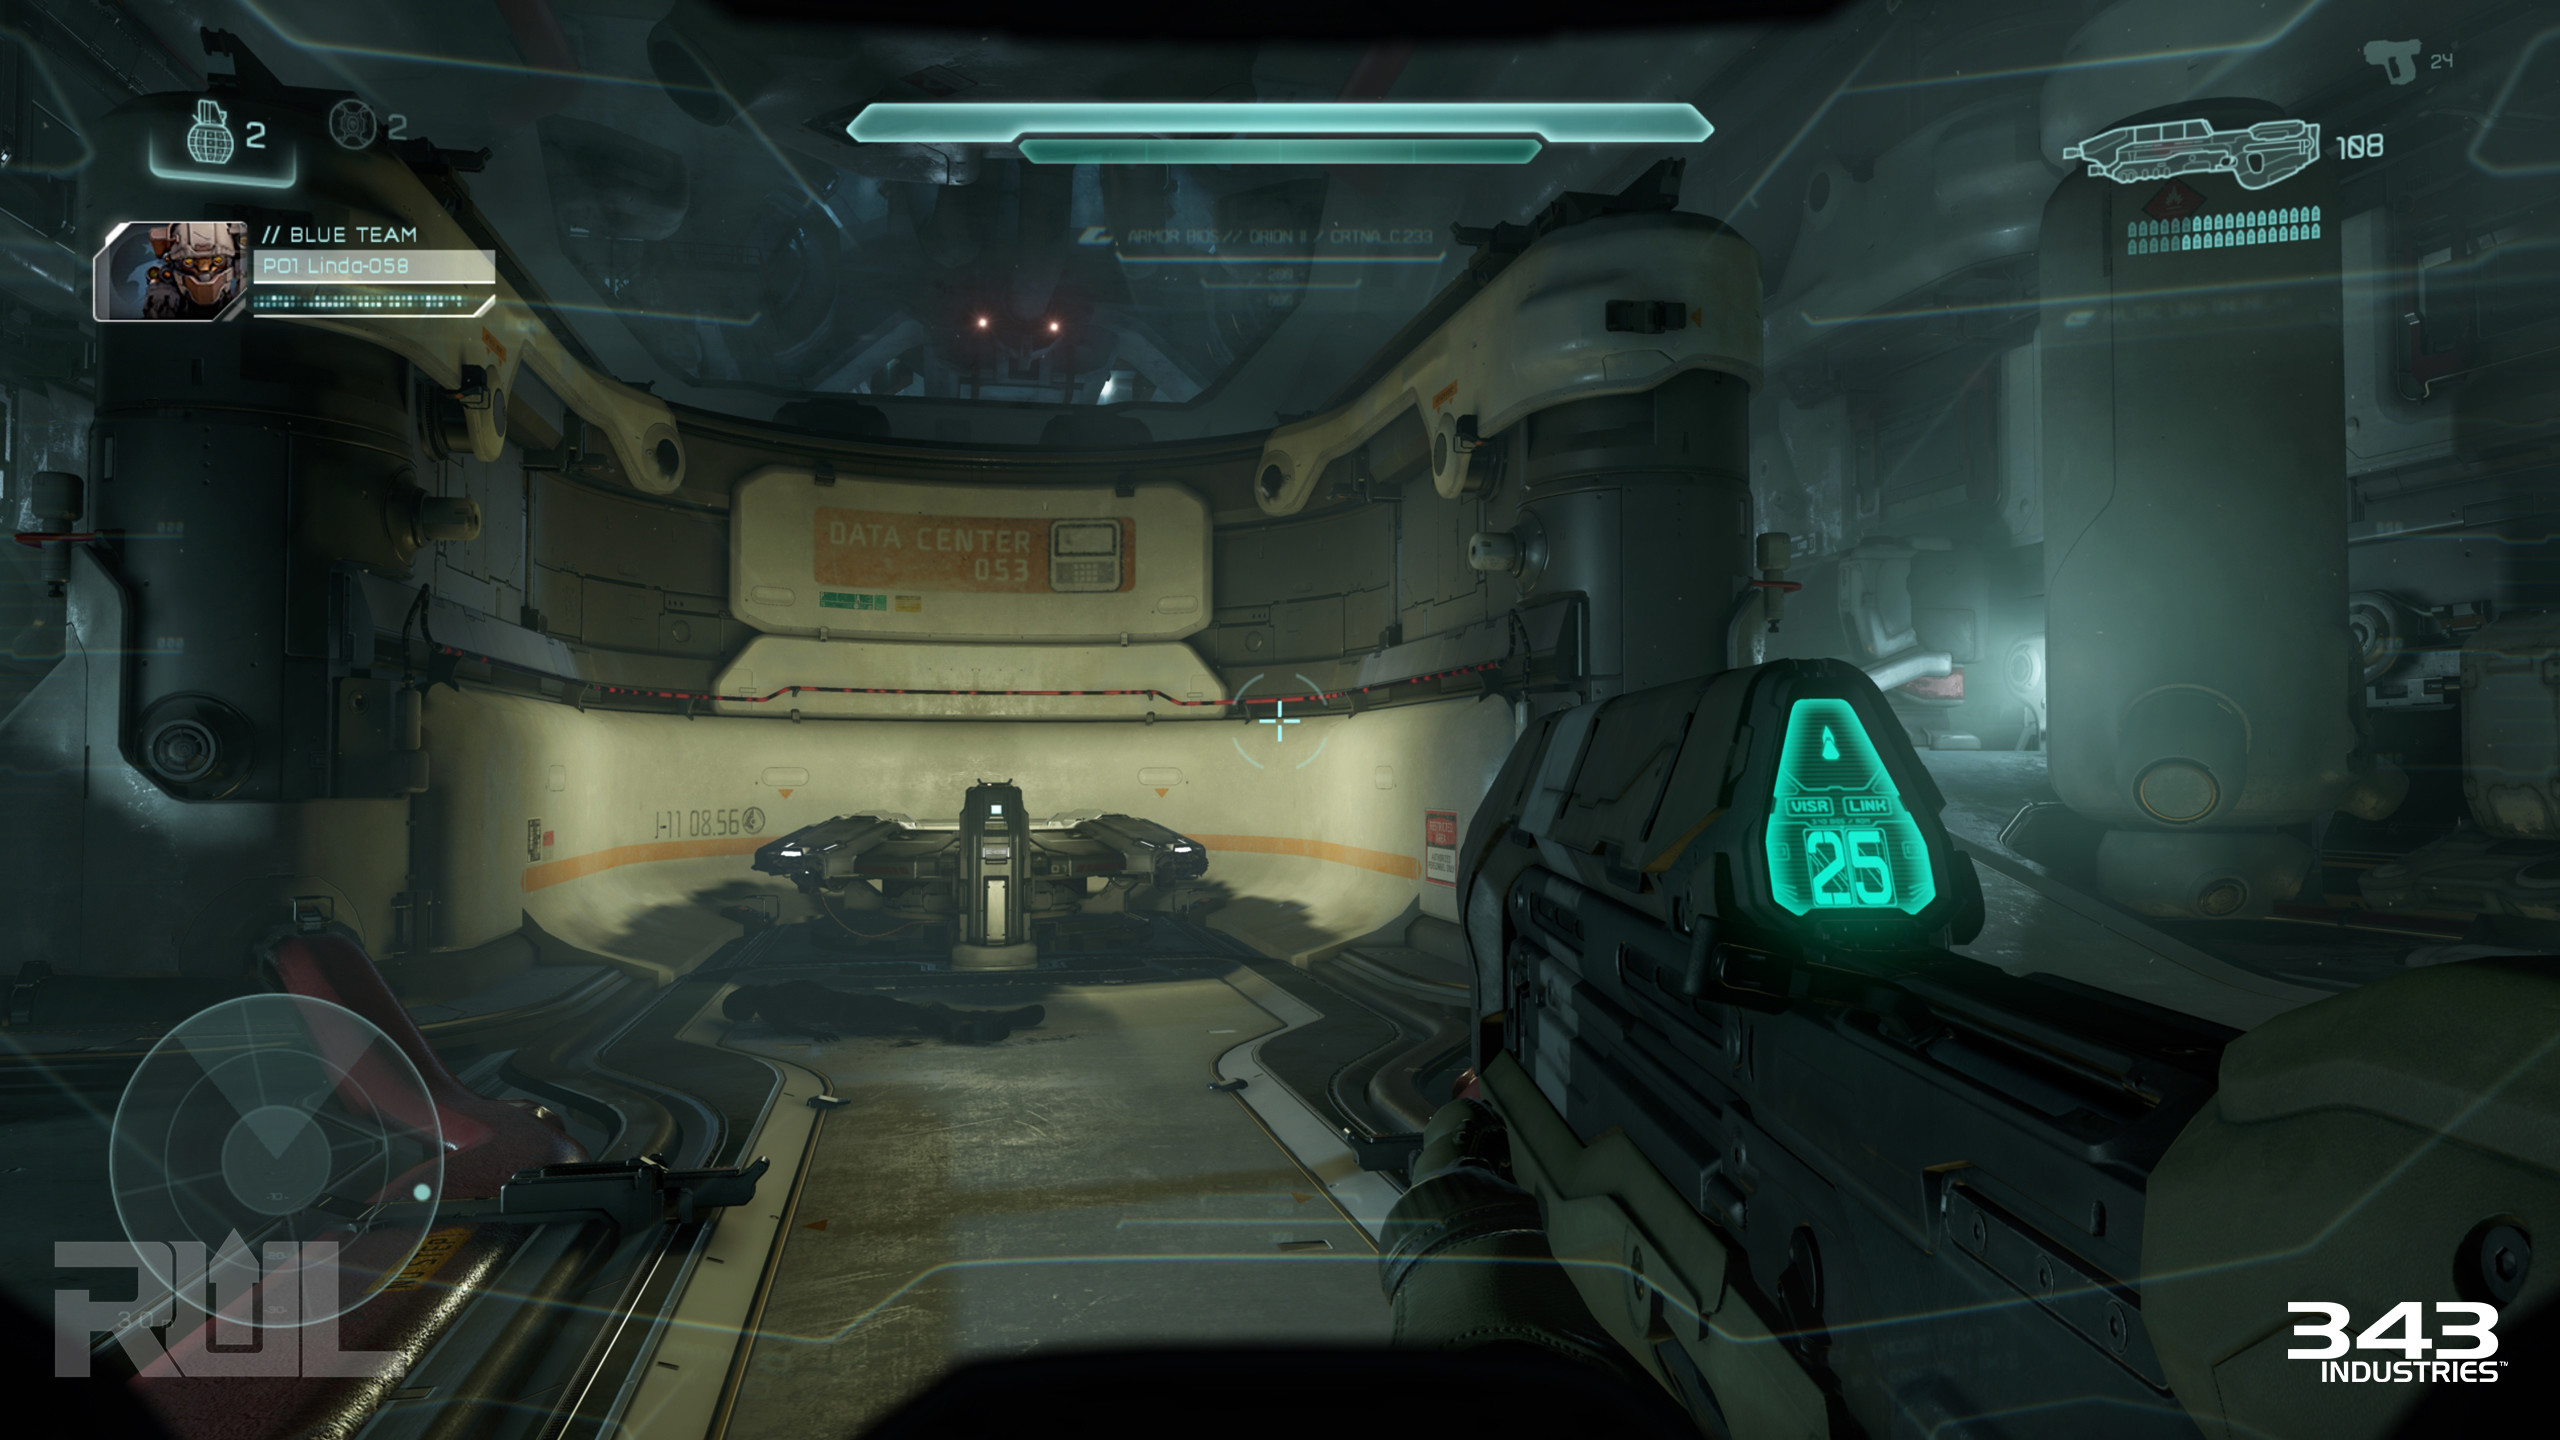 2560x1440 Huge Halo 5 info dump Free DLC and squad controls! - Halo 5: Guardians -  Giant Bomb